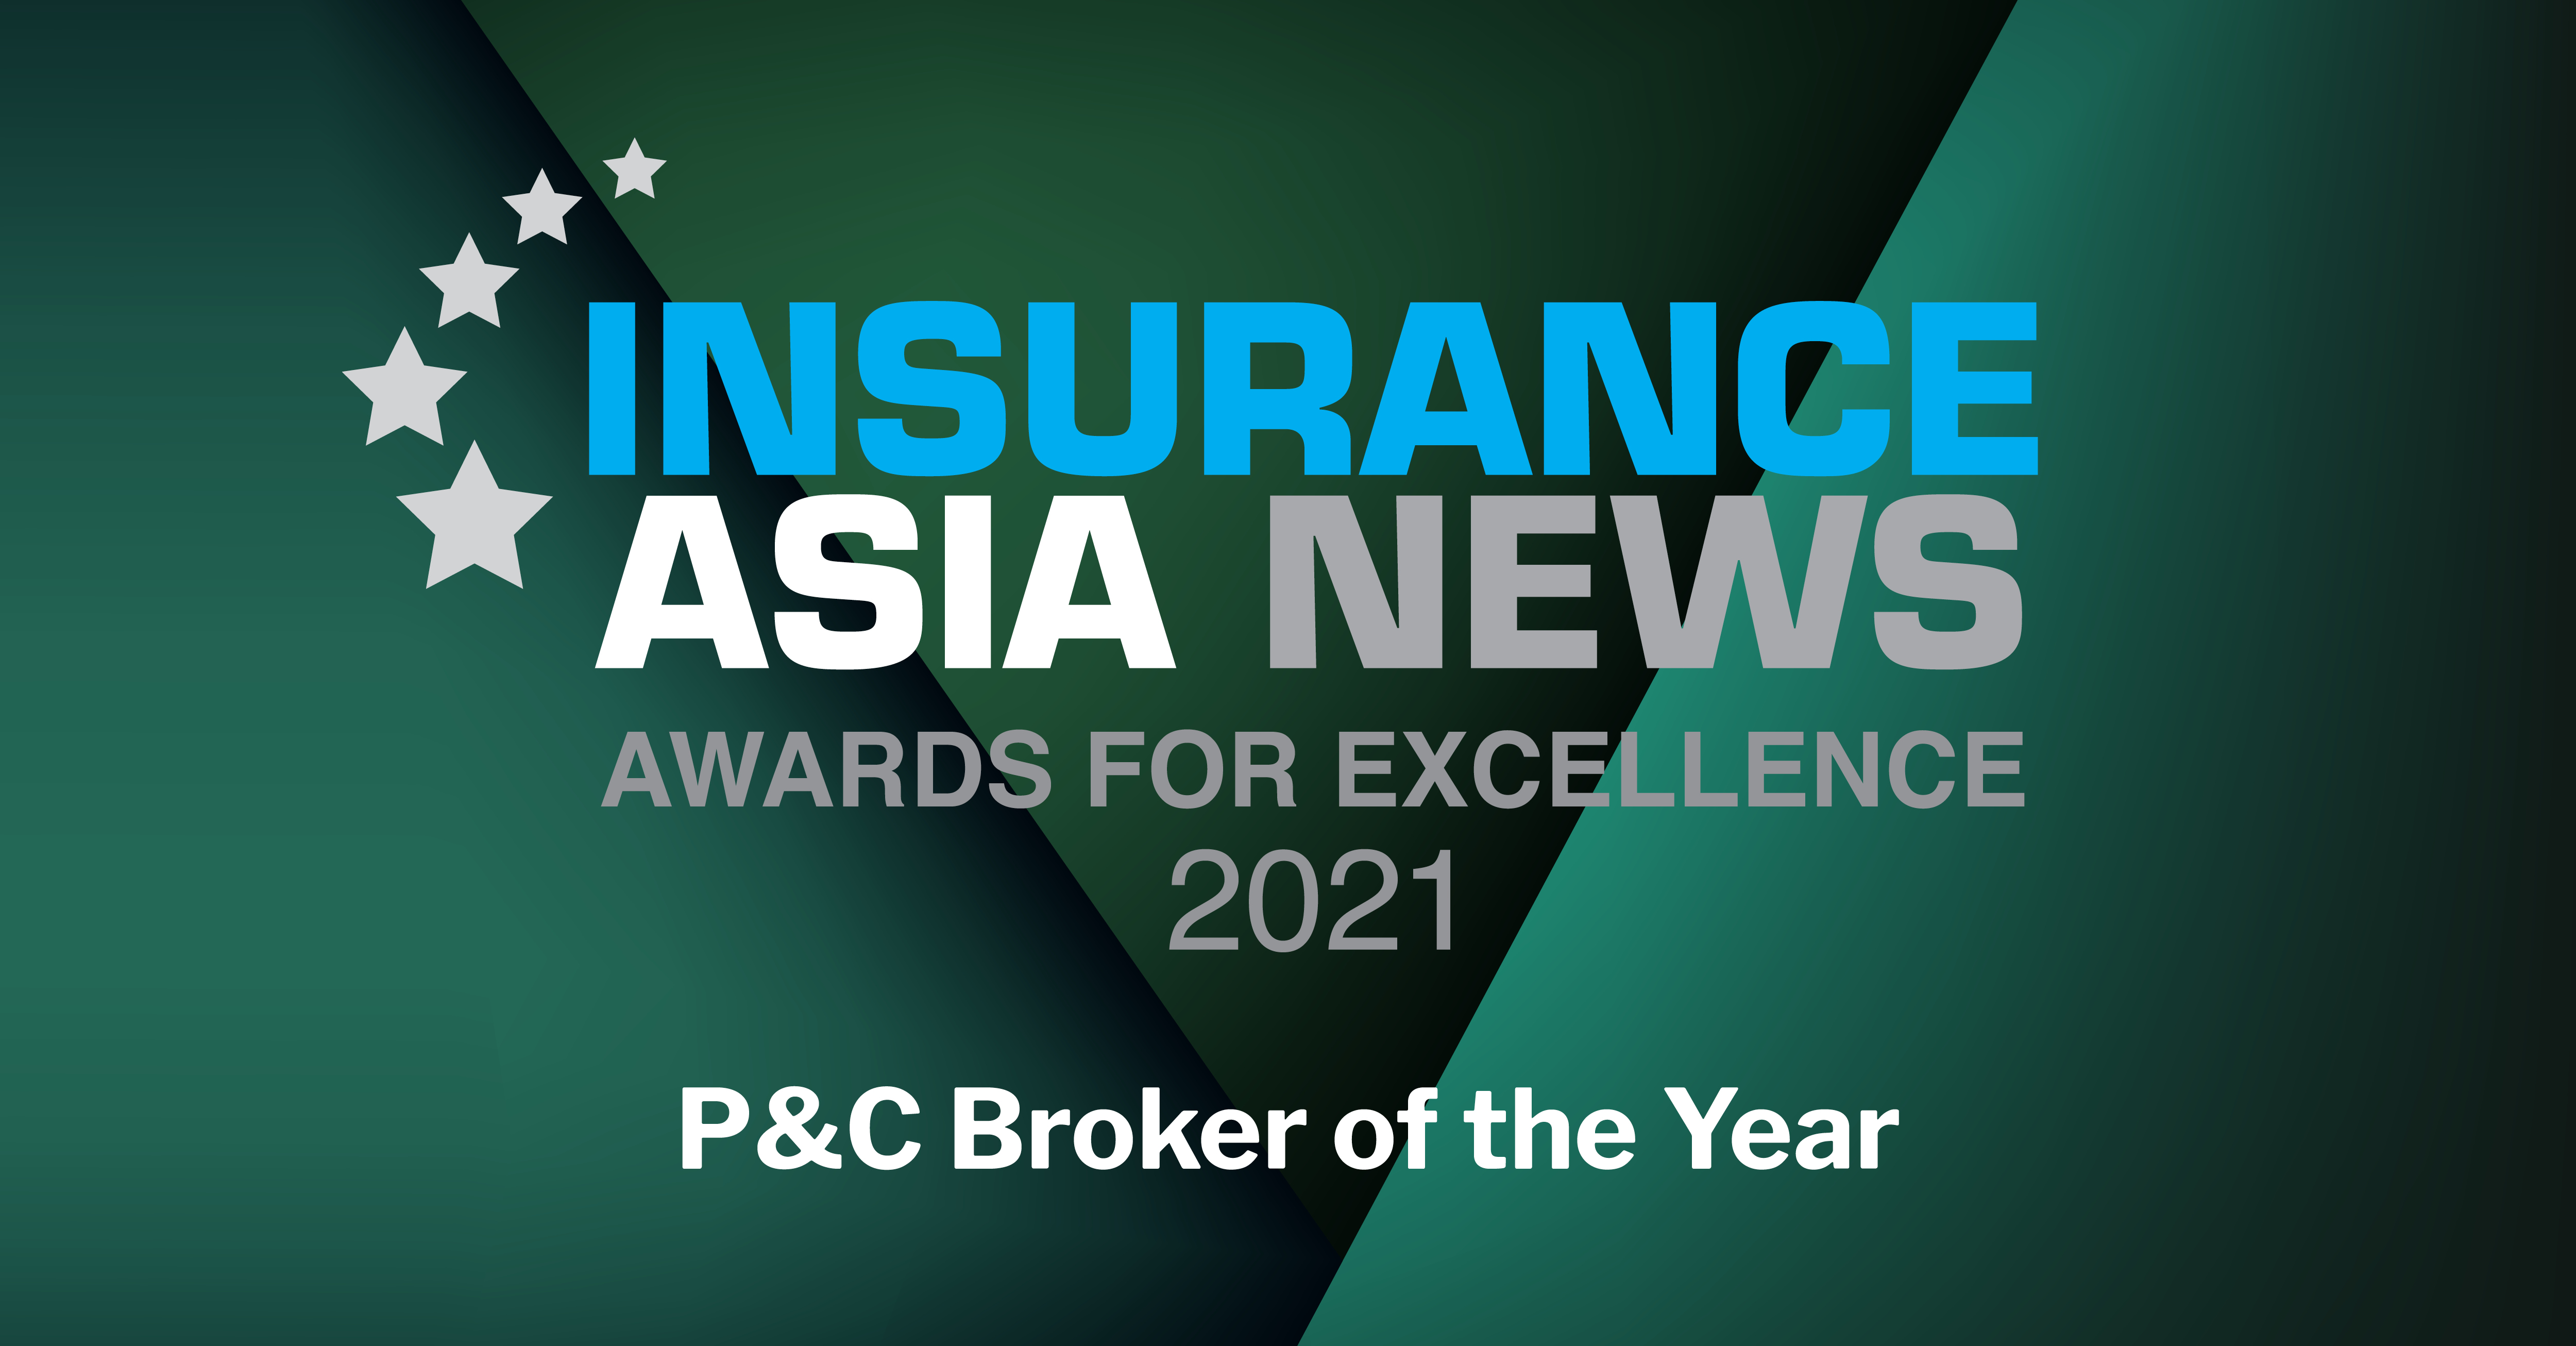 Insurance Asia News